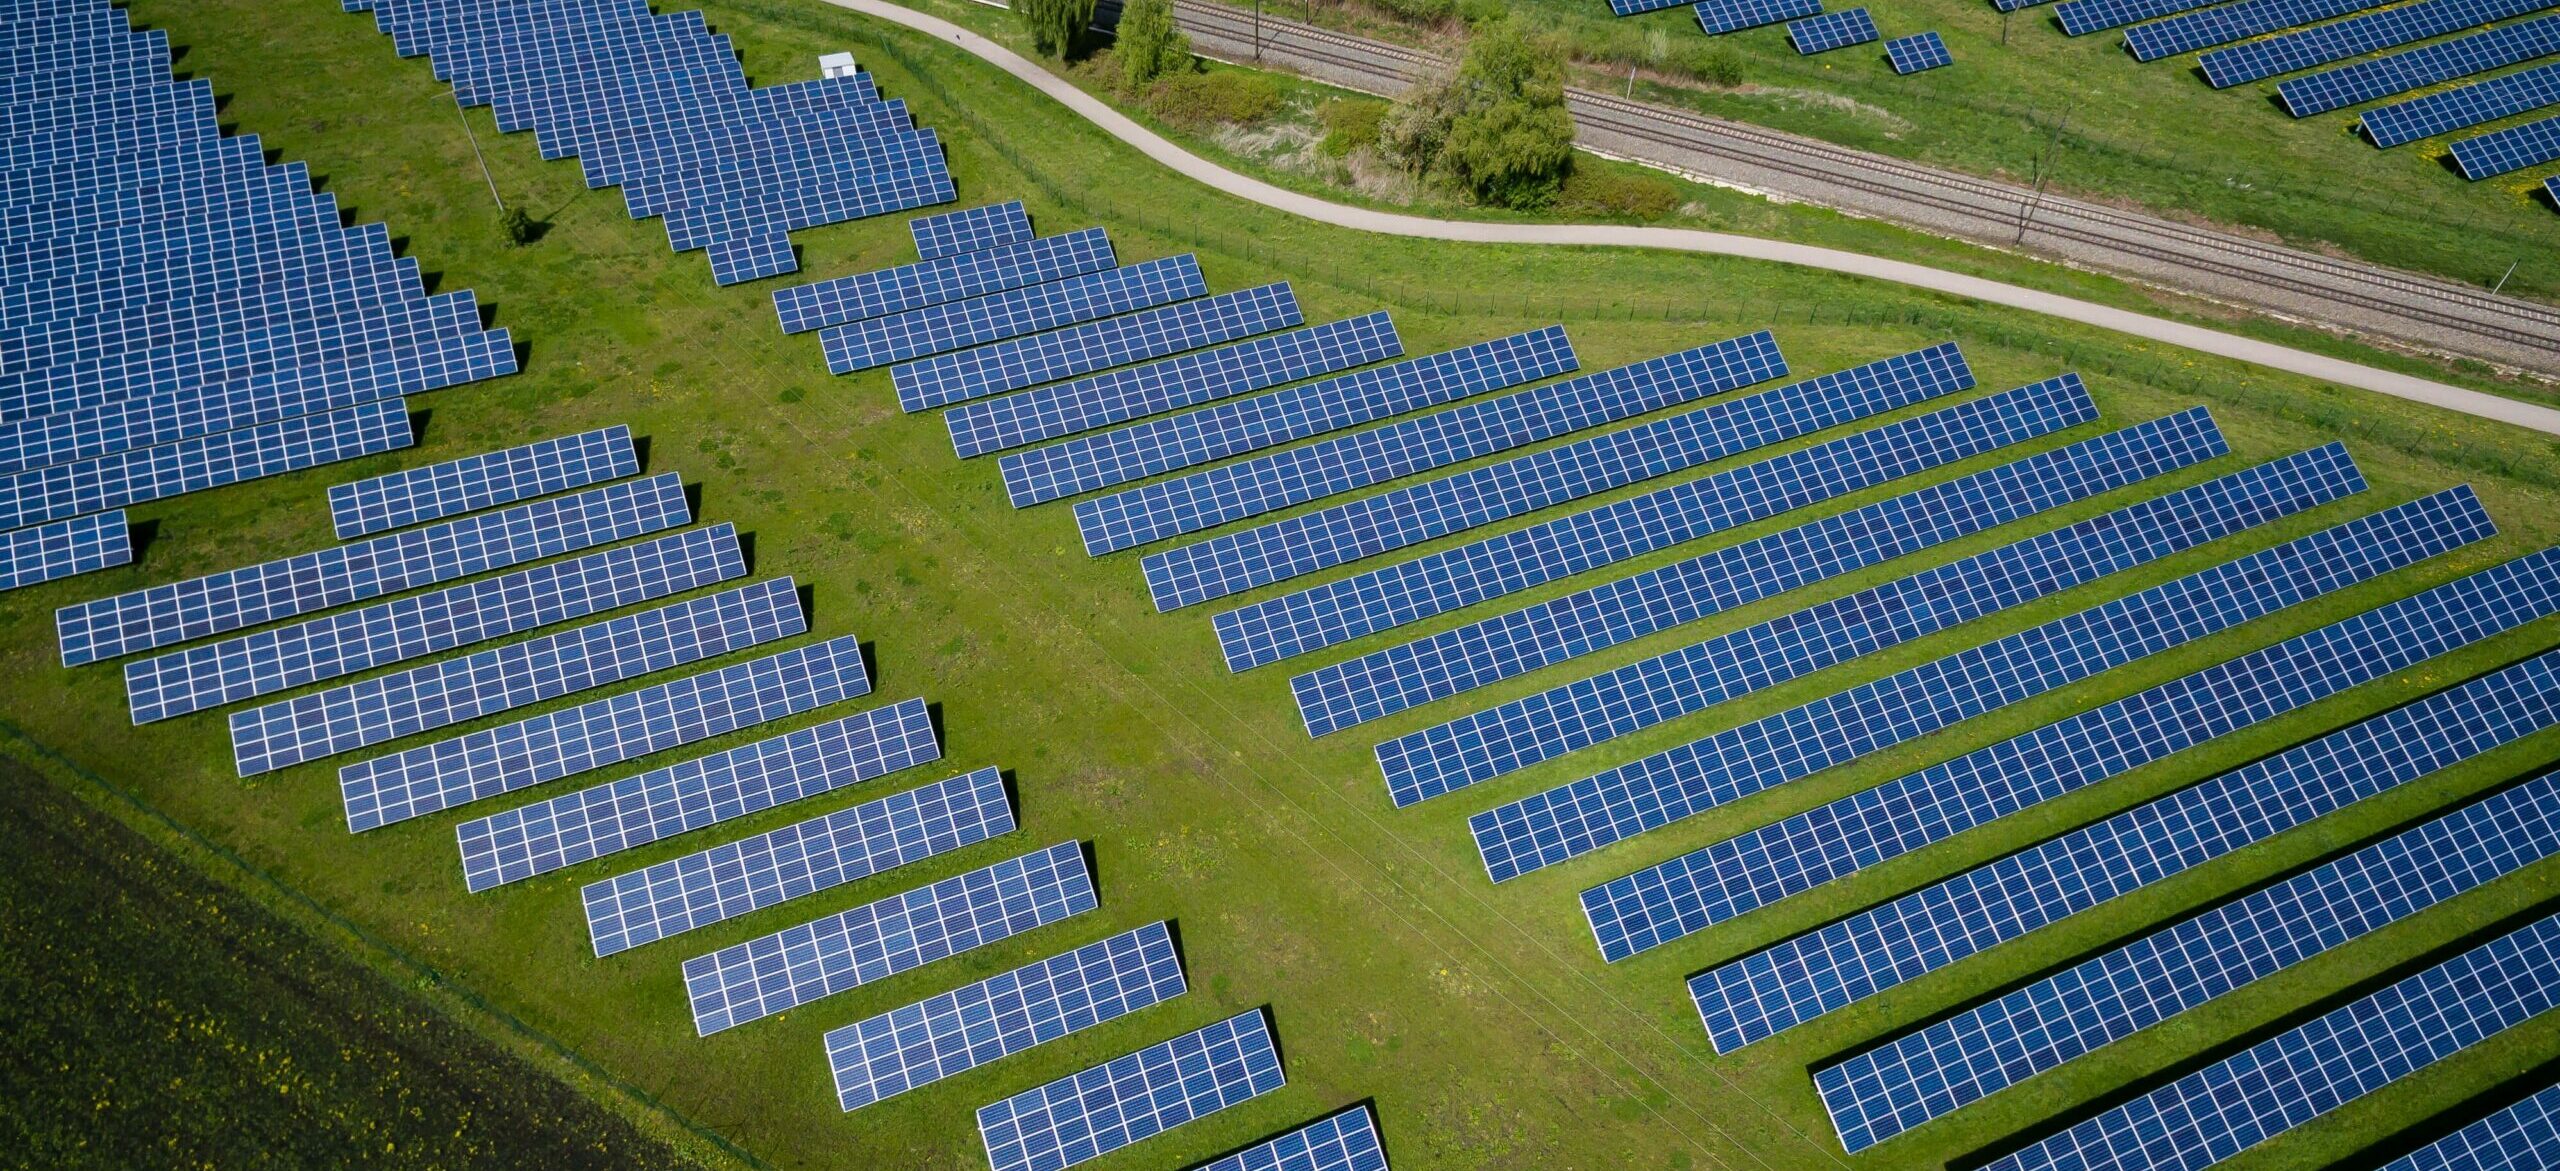 German renewable energy developers